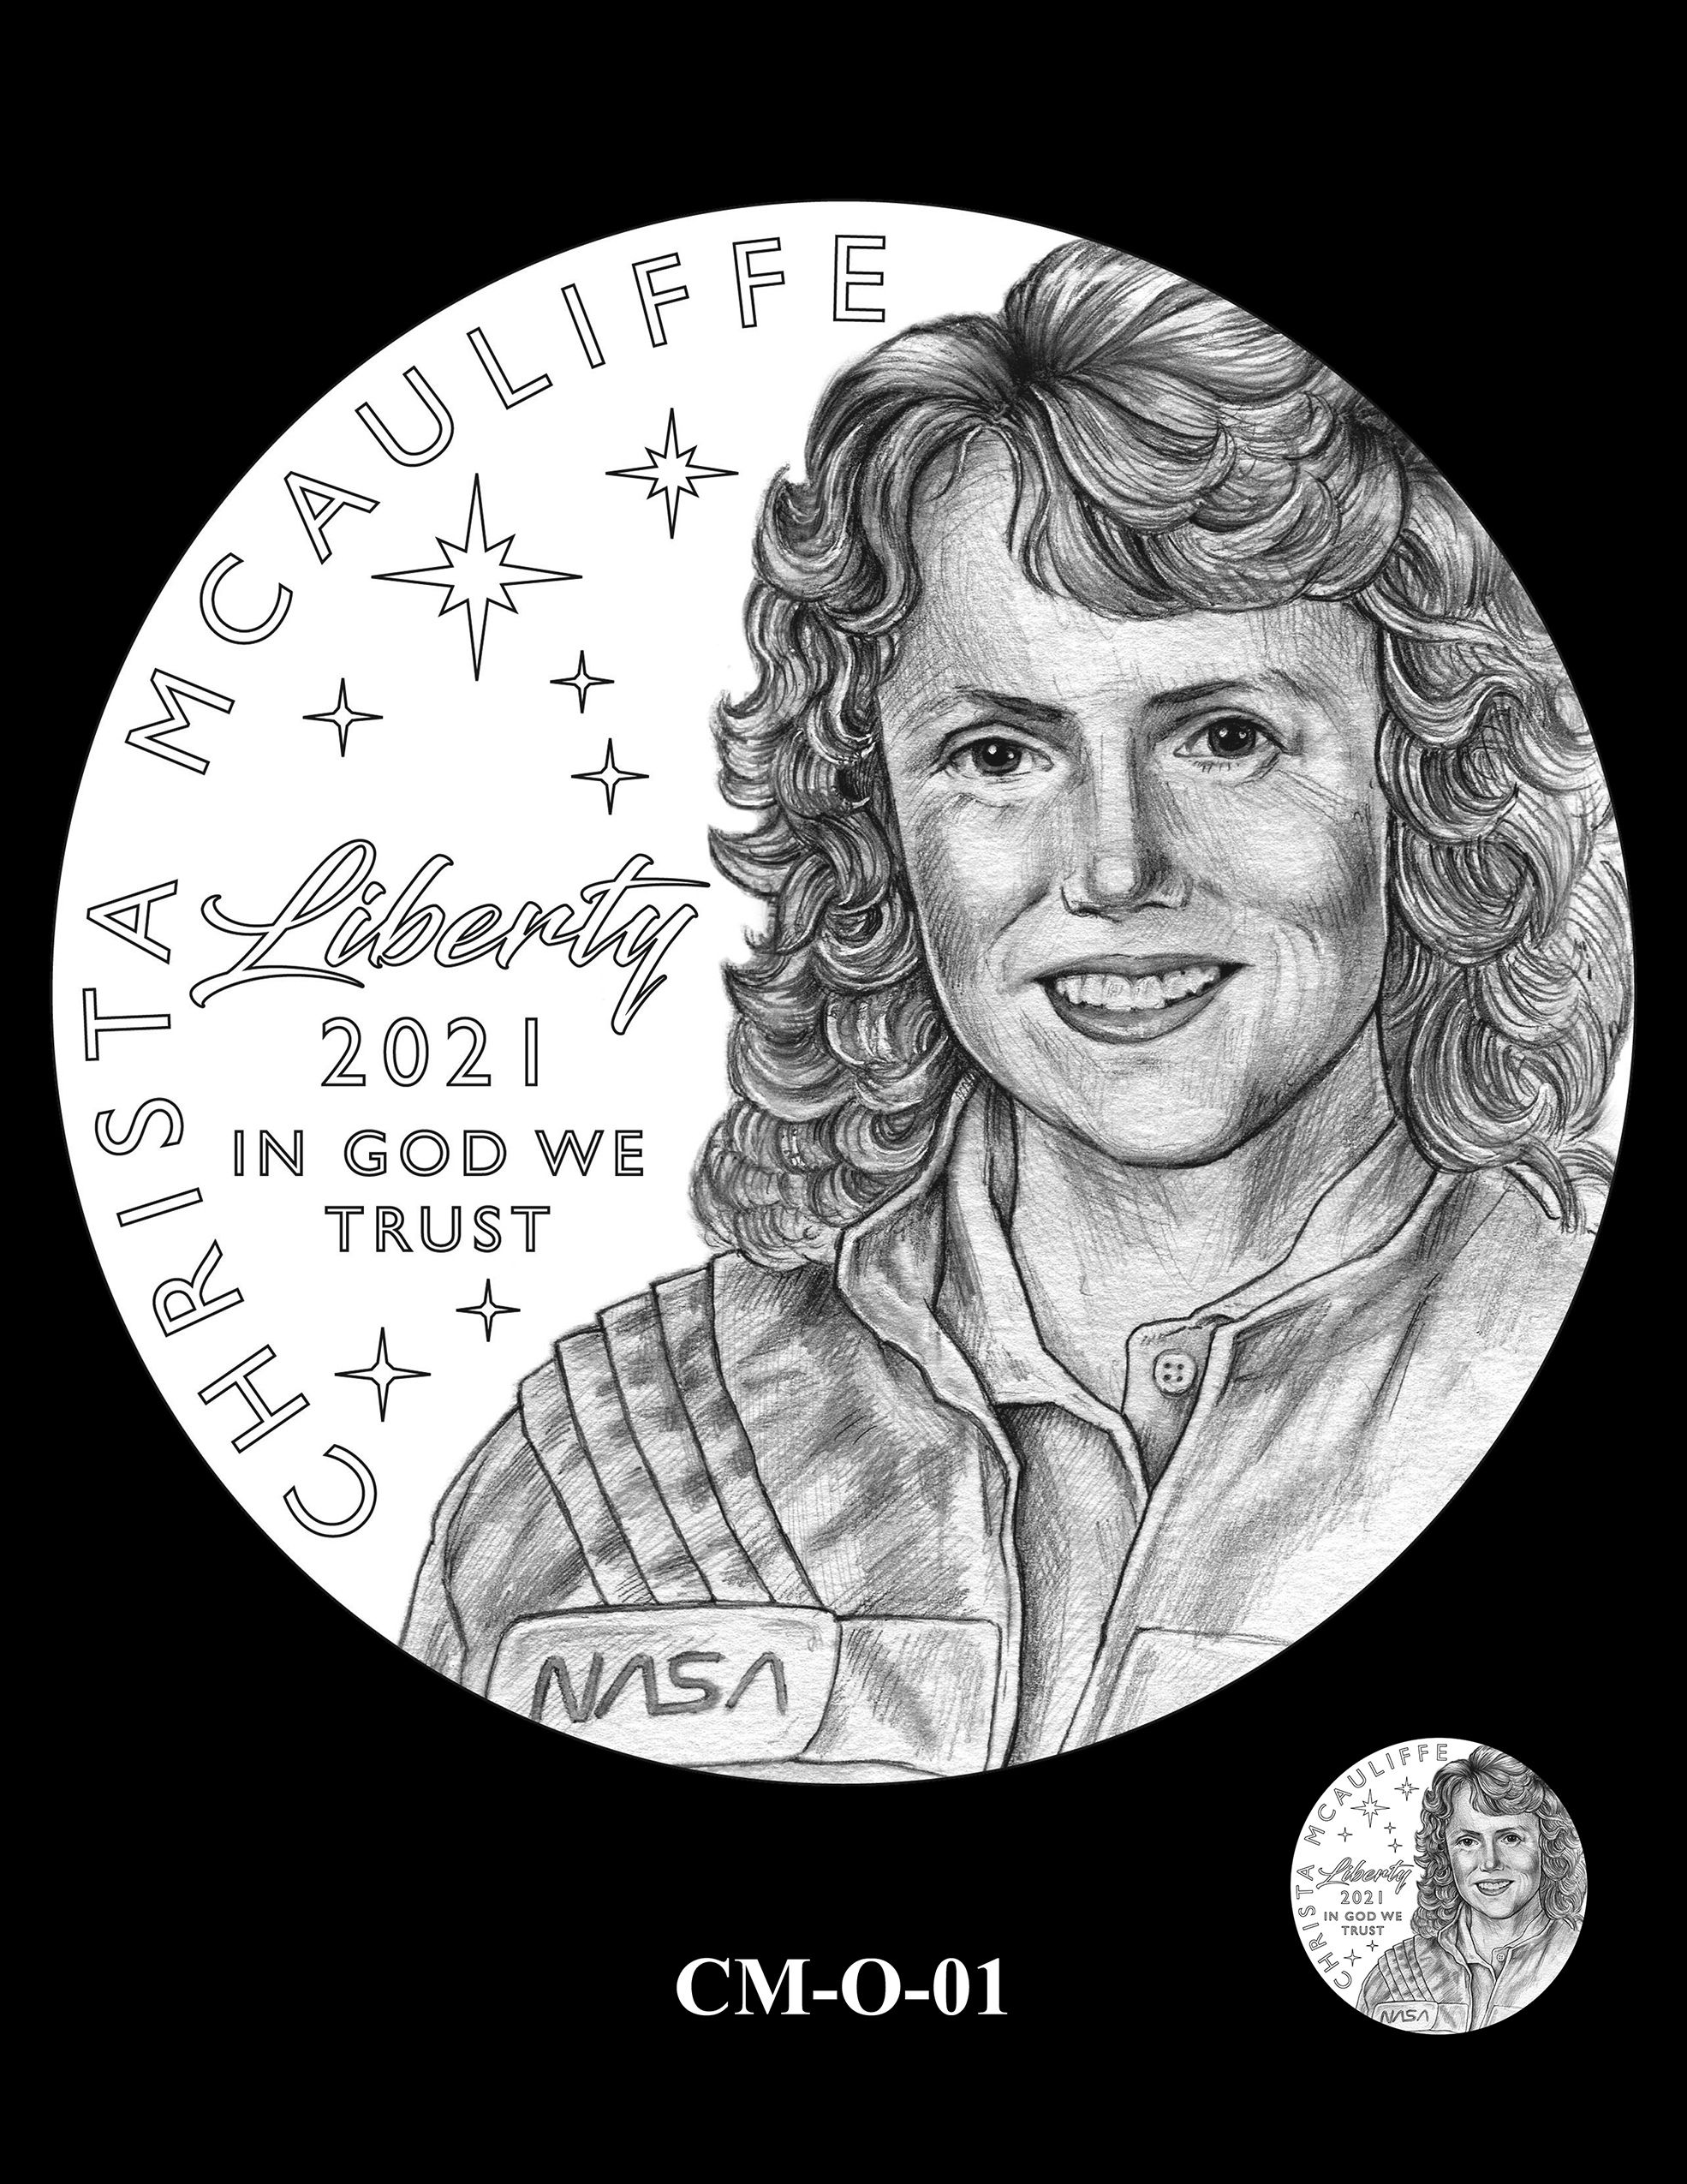 CM-O-01 -- 2021 Christa McAuliffe Commemorative Coin